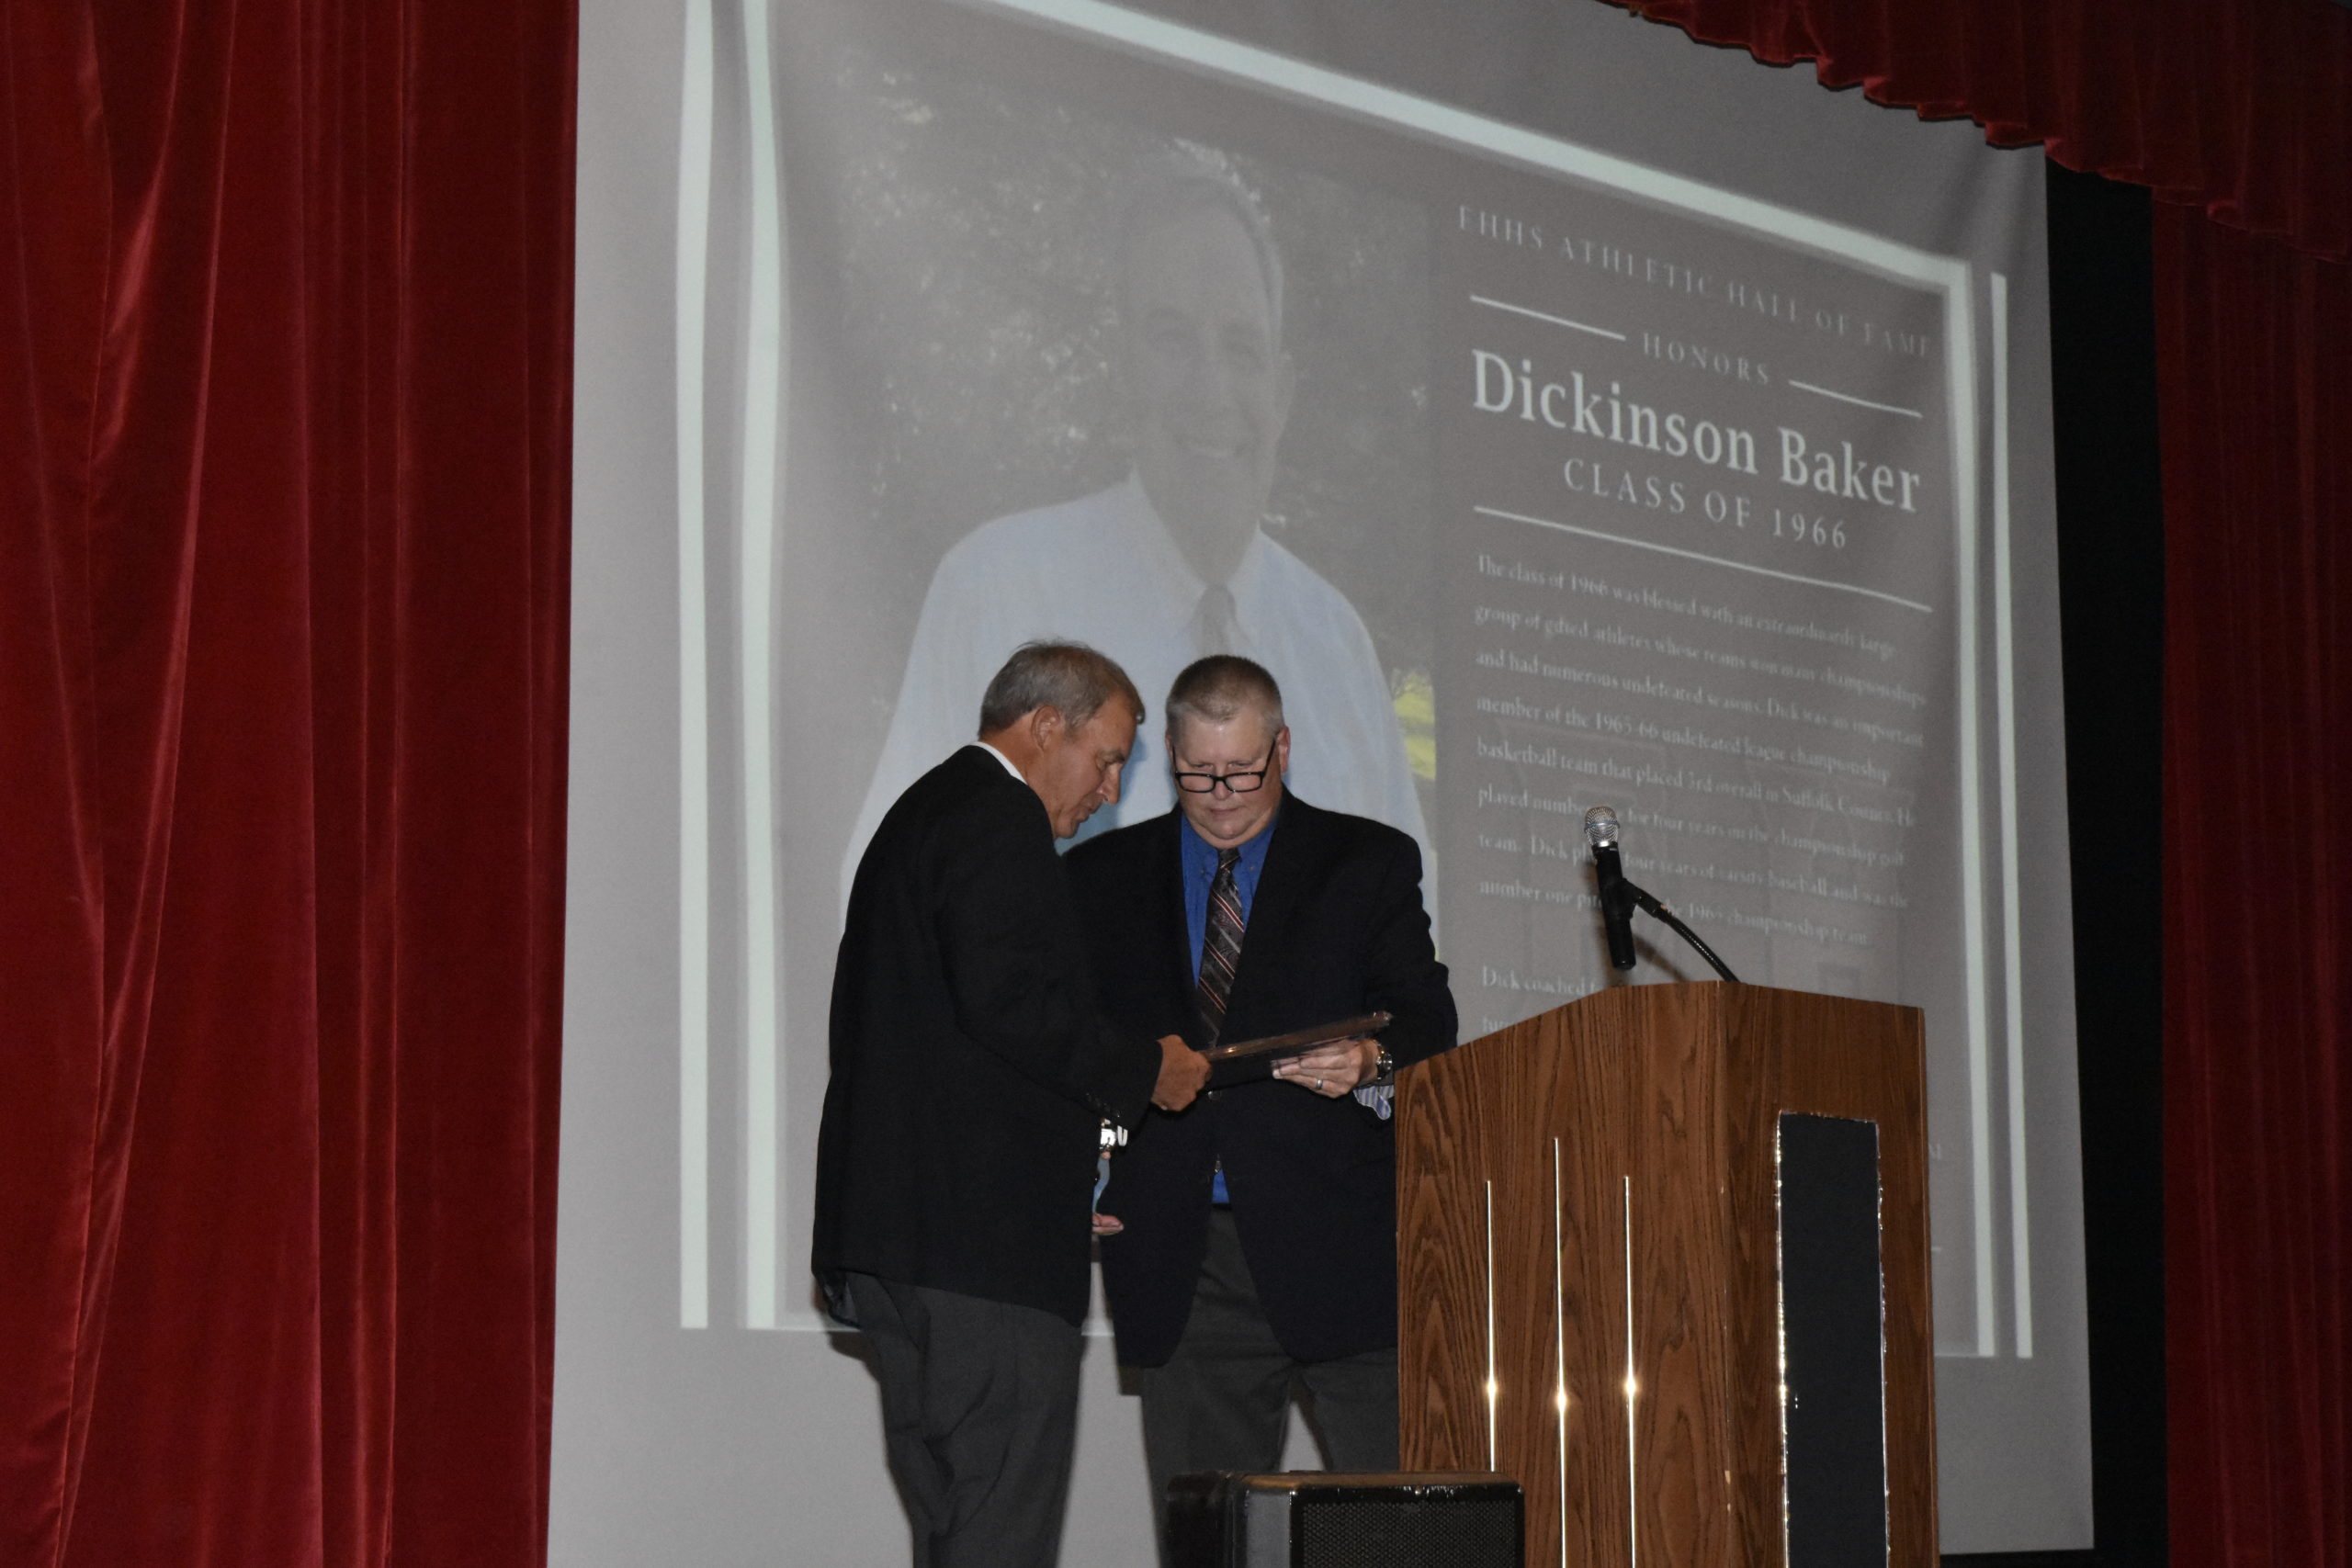 Richard Schneider hands Dickinson Baker his Hall Of Fame plaque.